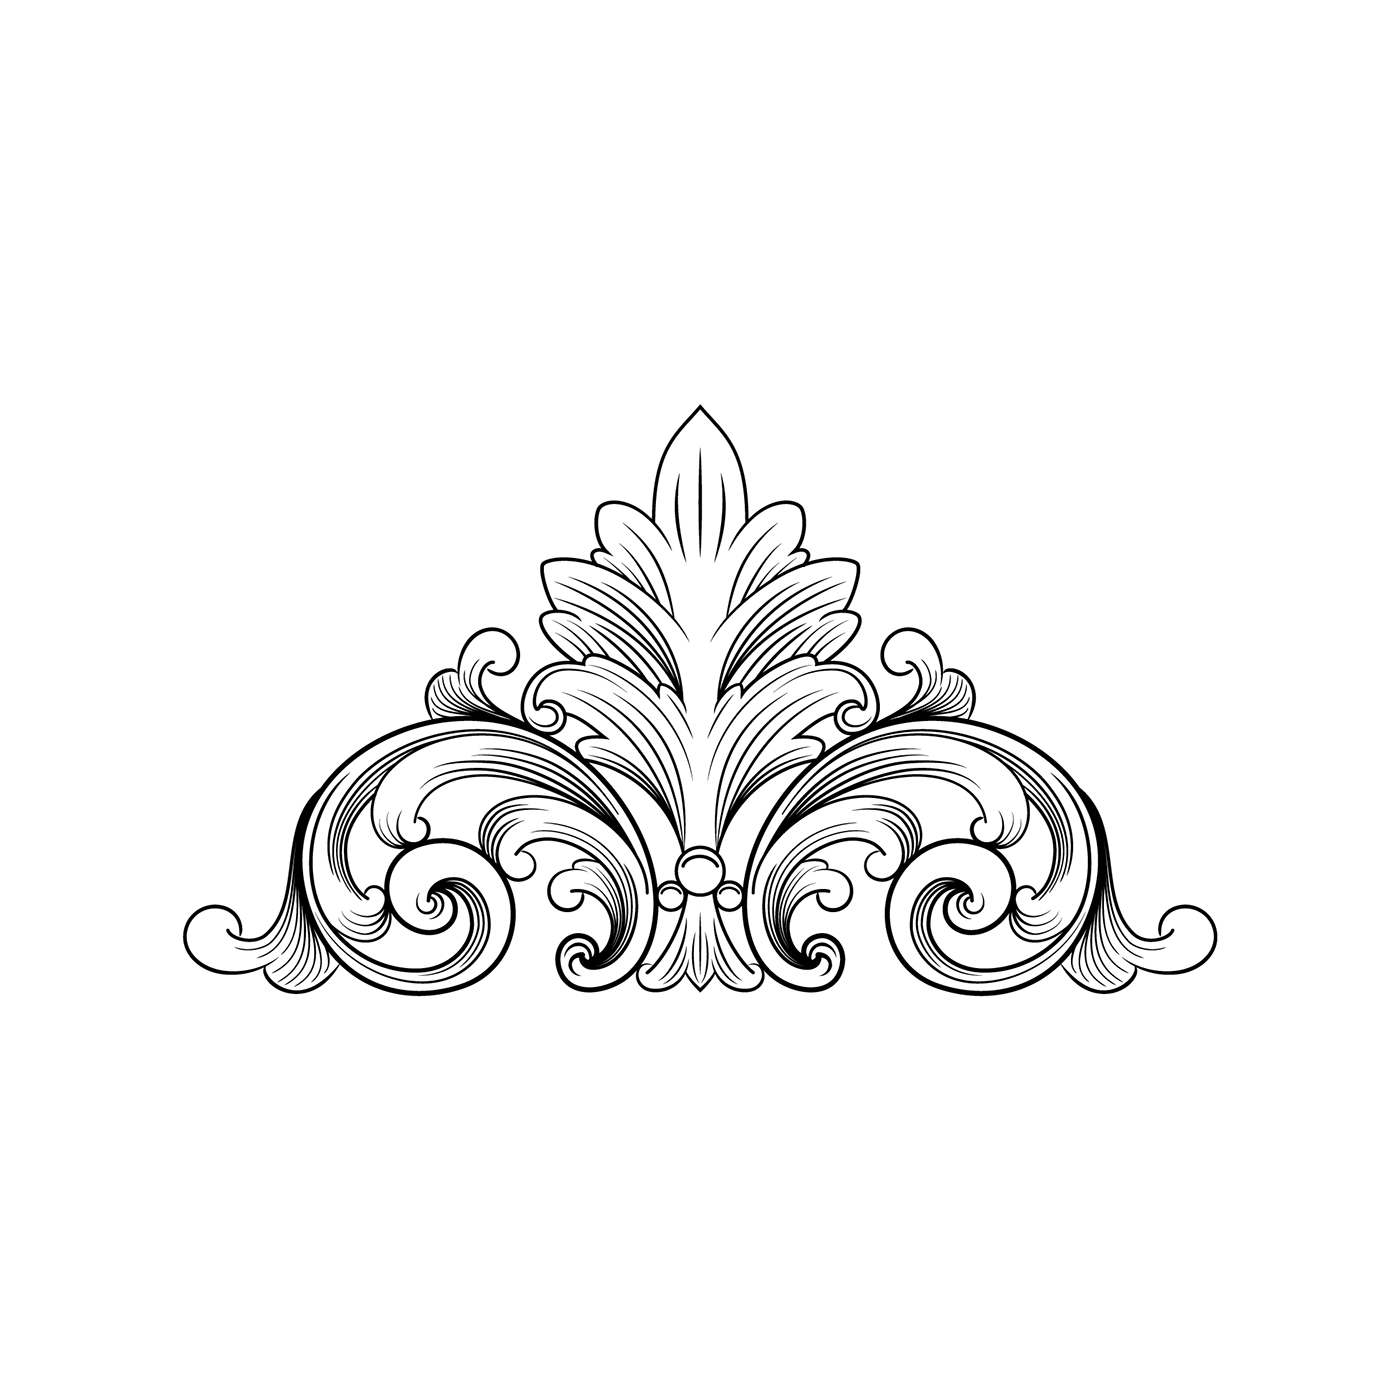 Acanthus baroque decorative elegant floral ornamental Renaissance rococo scrollwork vintage